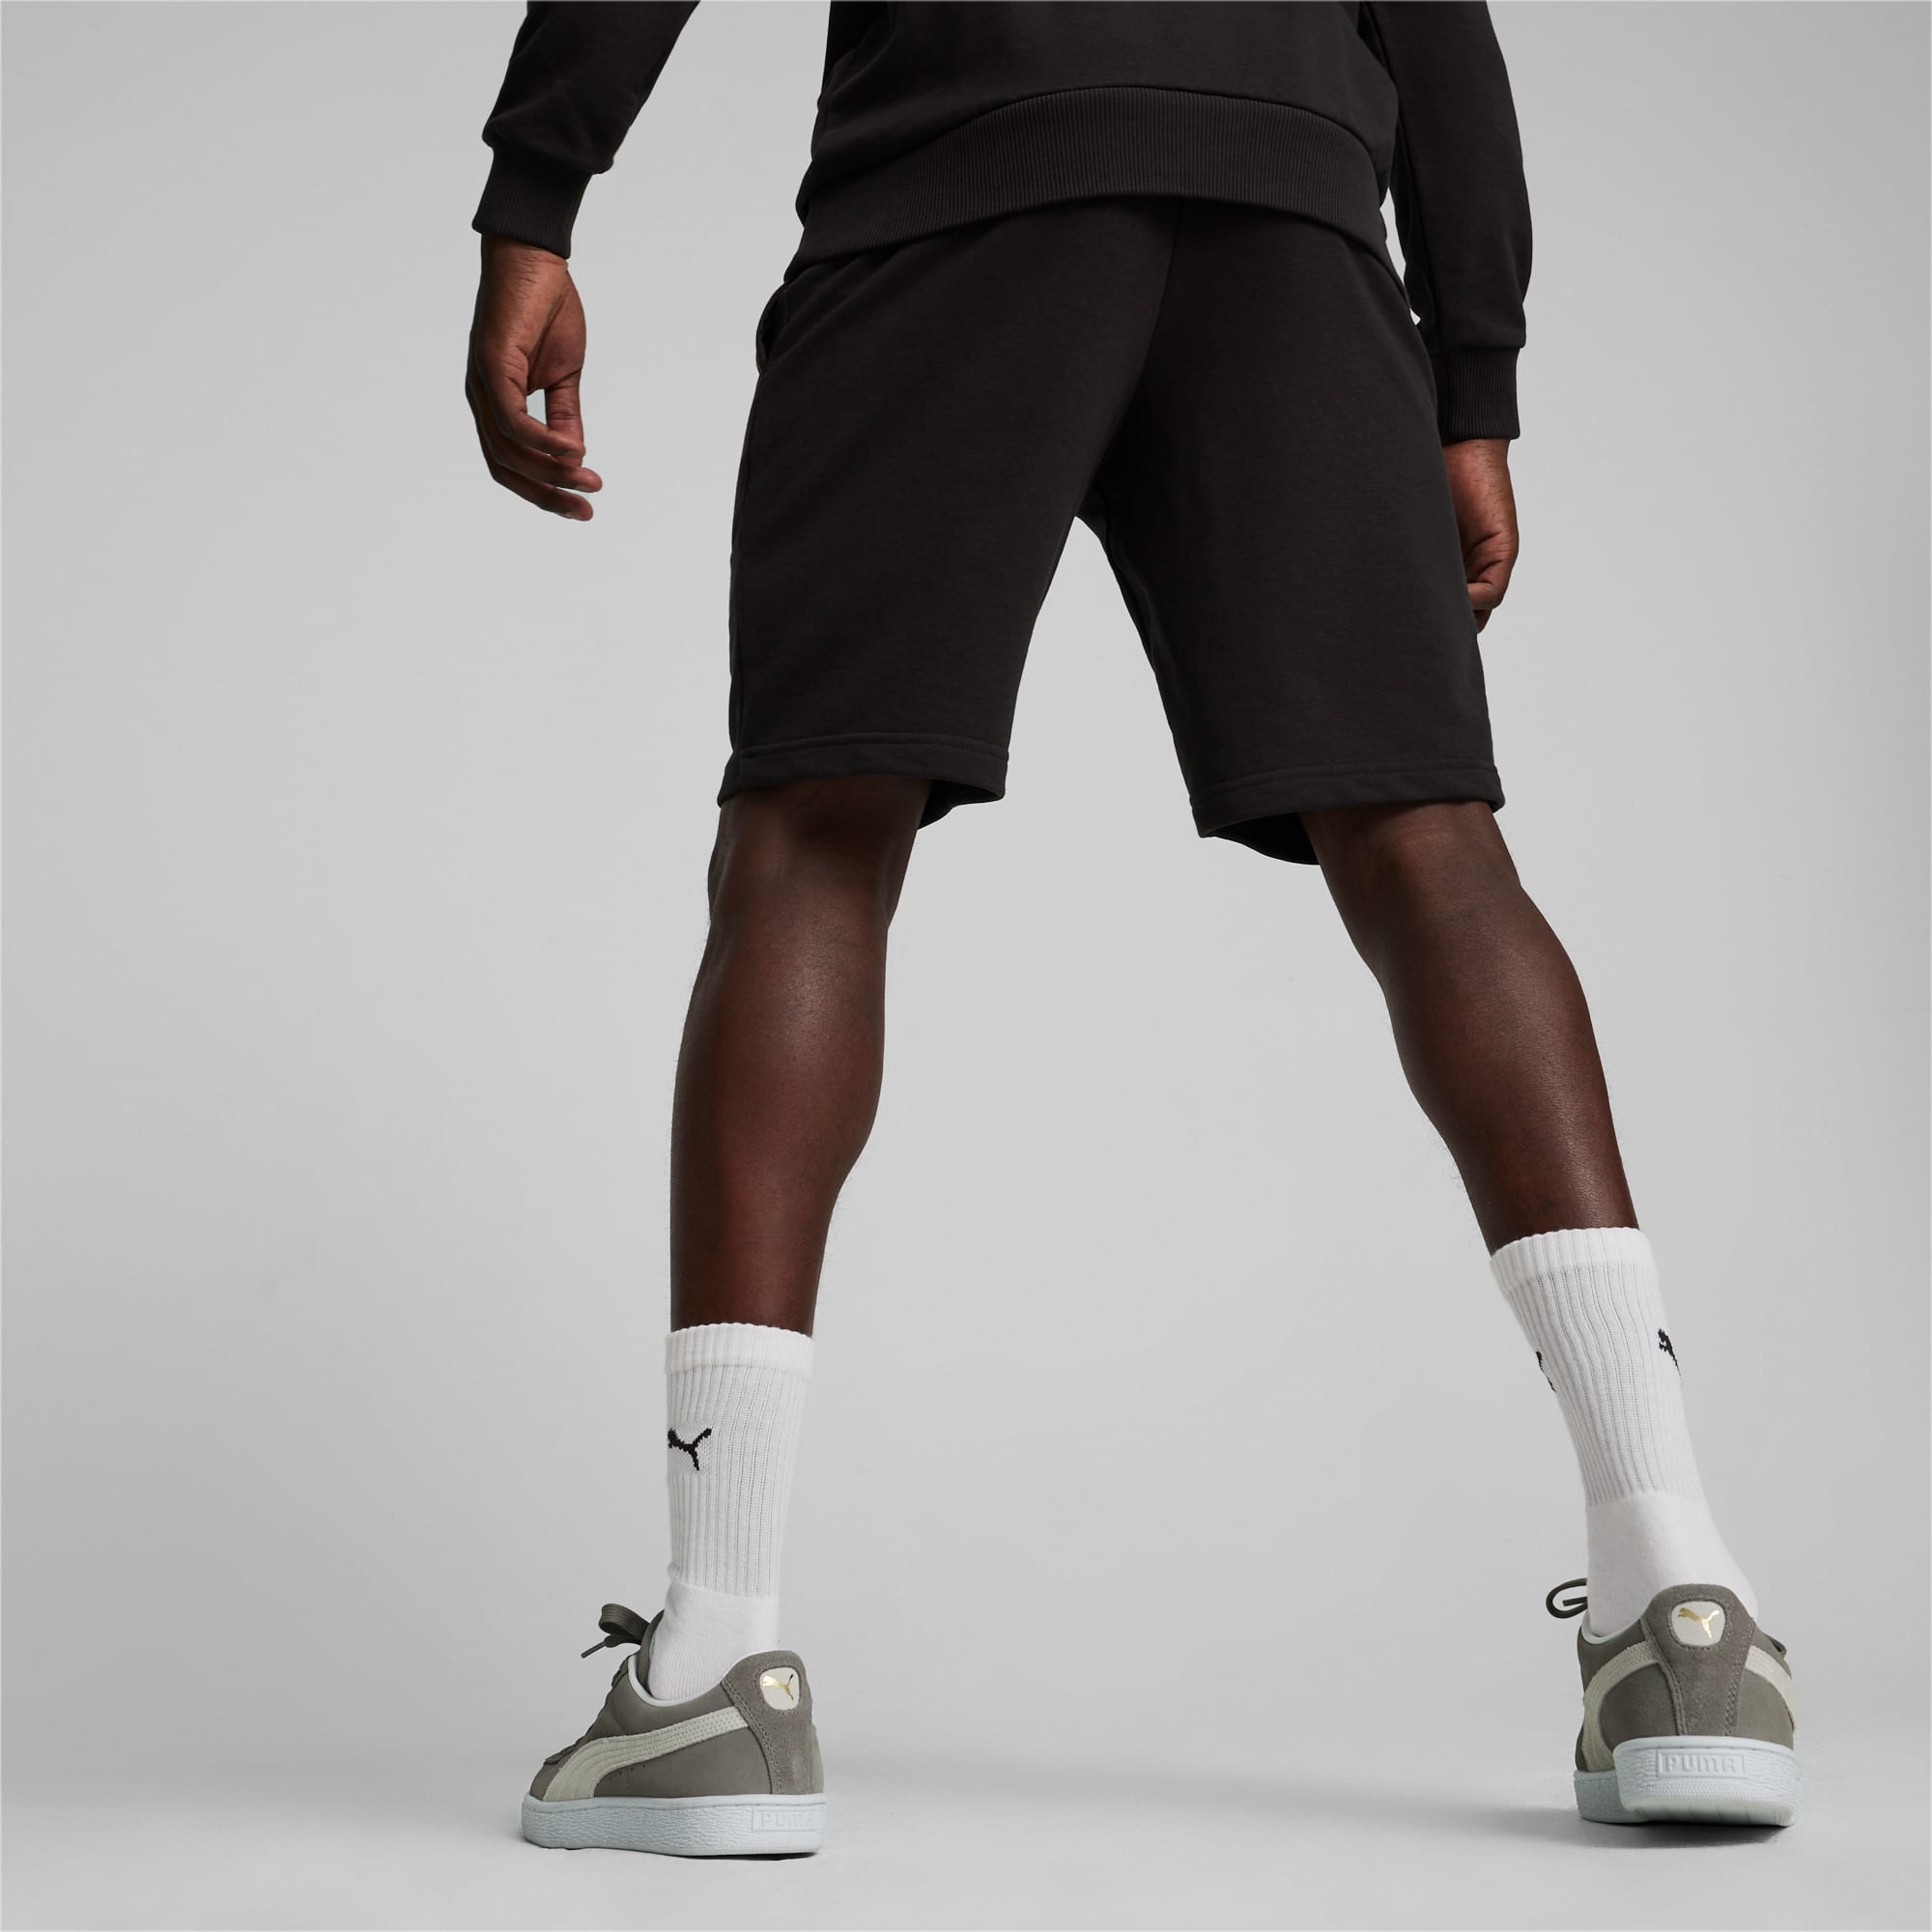 Men's PUMA AC Milan Ftblicons Shorts, Black, Size 3XL, Clothing